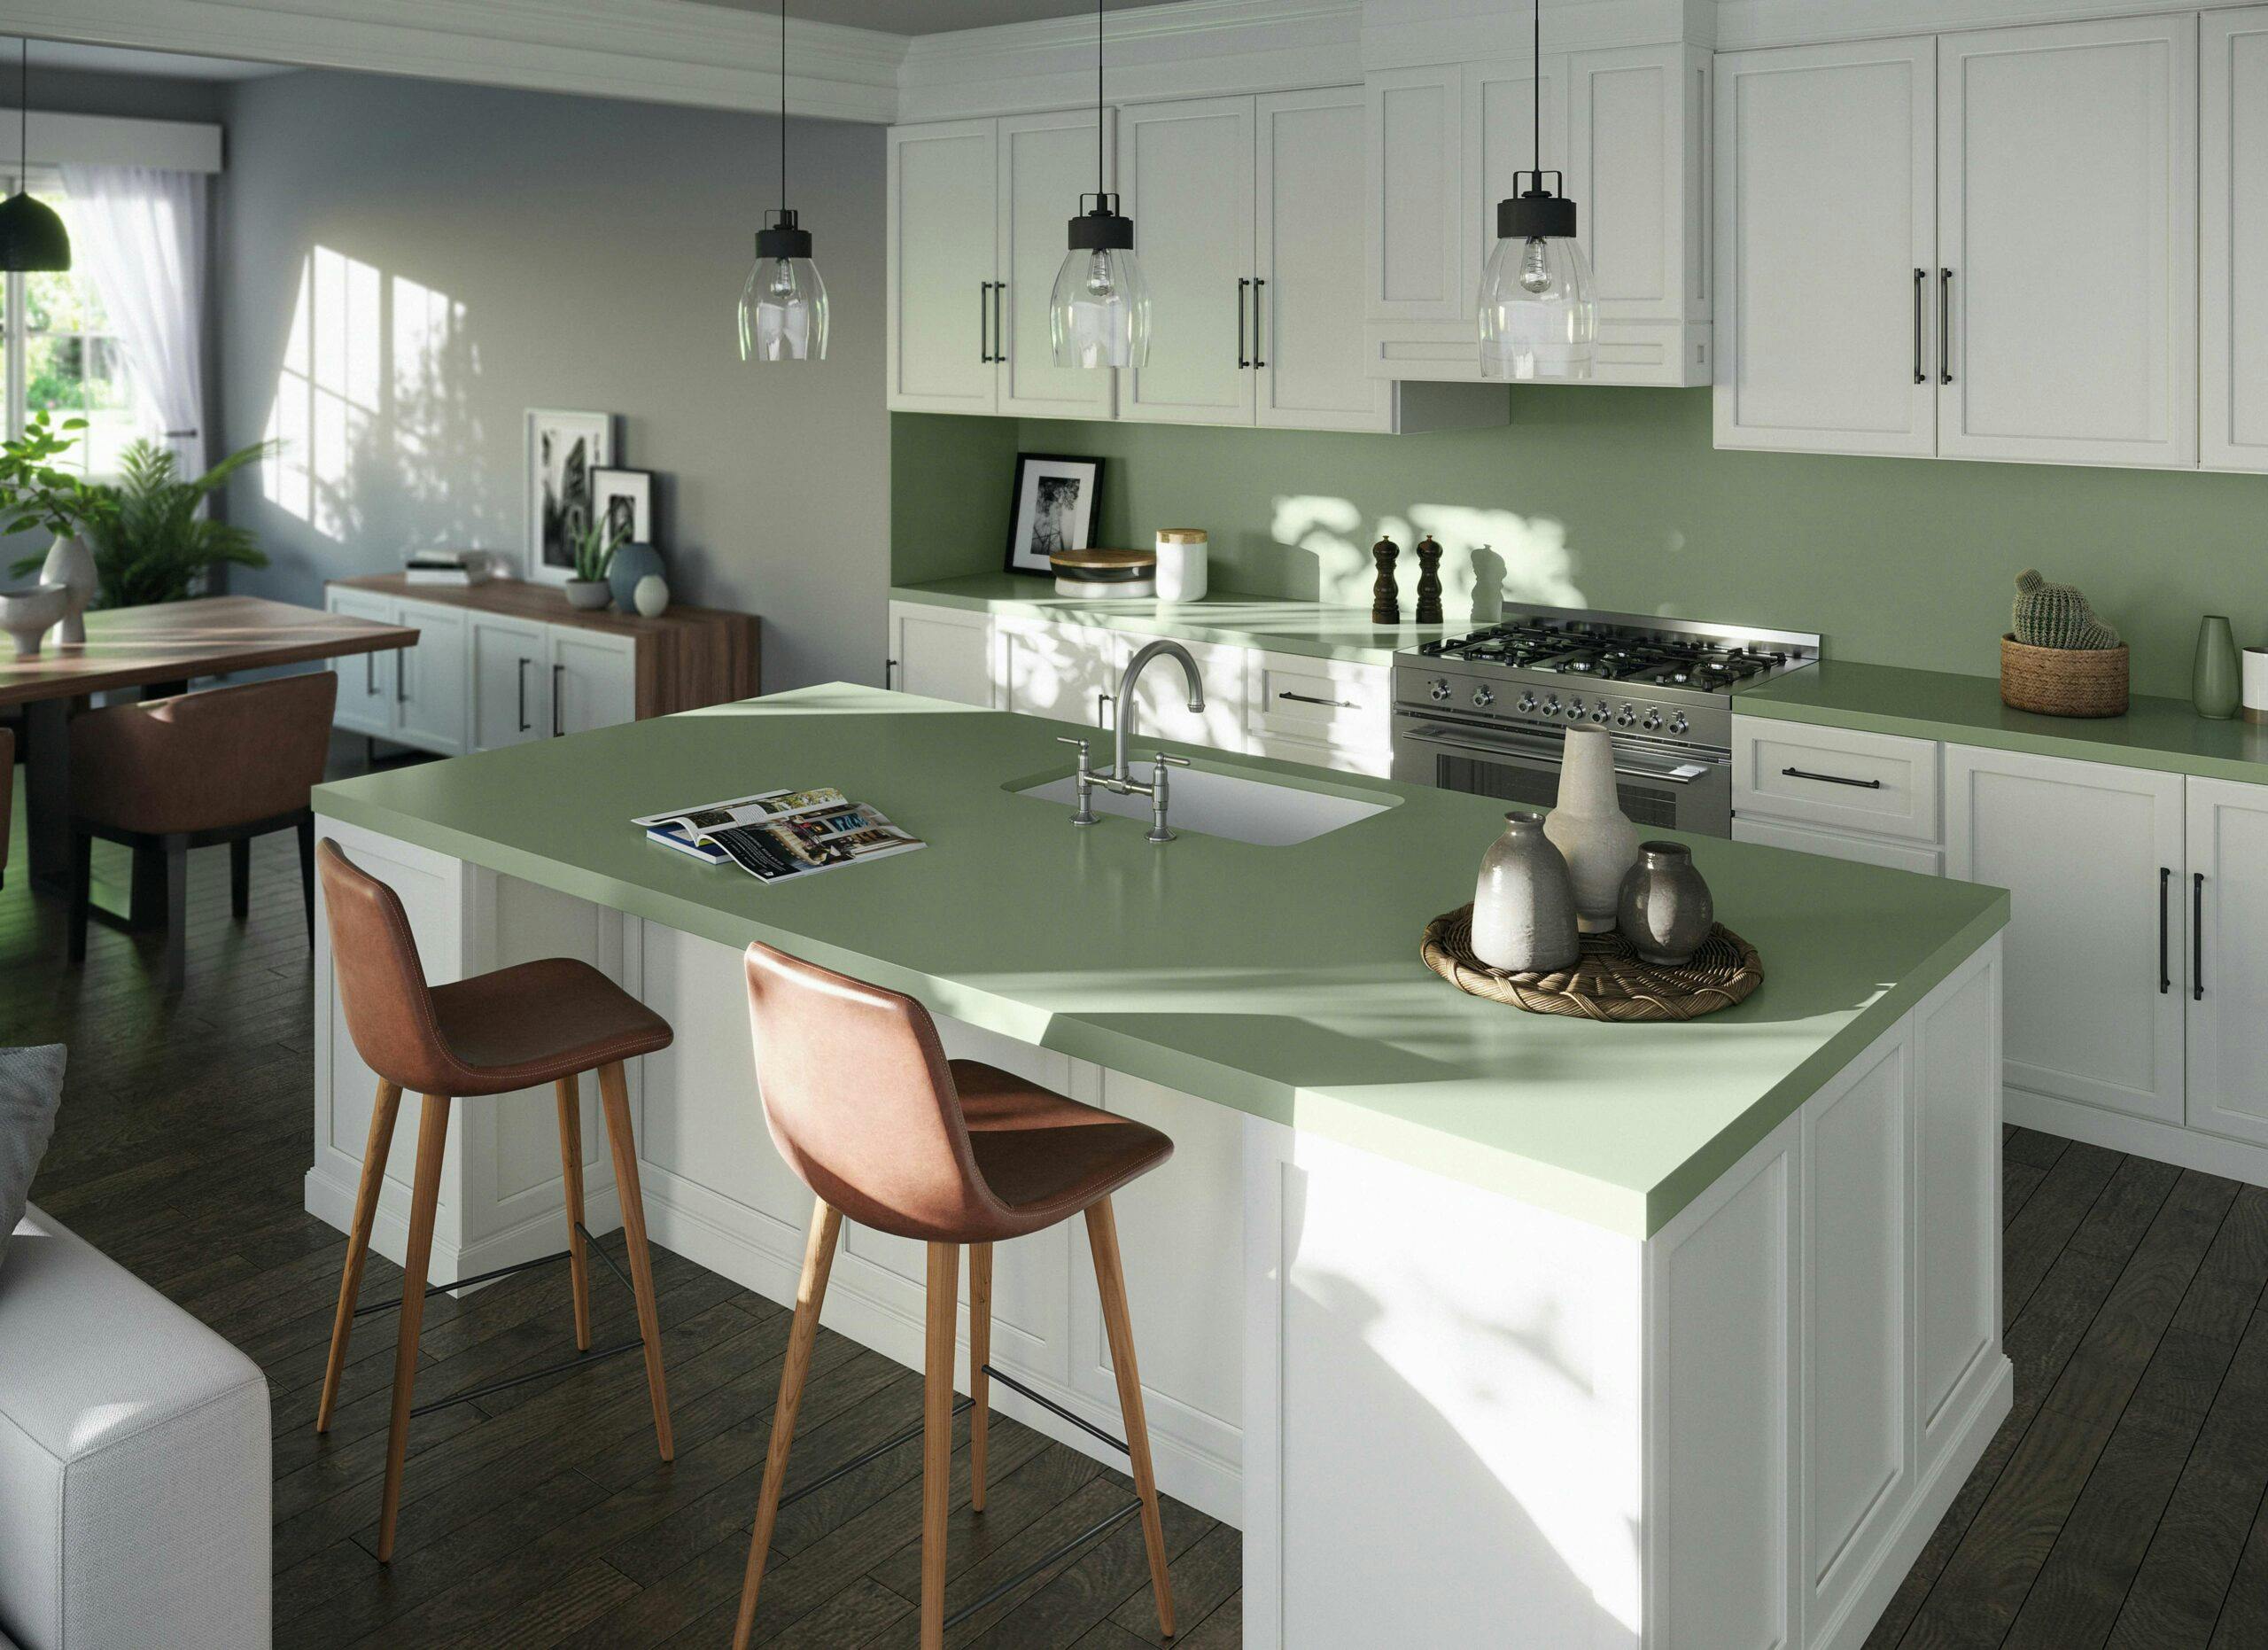 Image of Silestone Sunlit Days Posidonia Green kitchen scaled in Cosentino’nun Silestone Posidonia Yeşili Evlere Dinlendirici Hava Katıyor - Cosentino